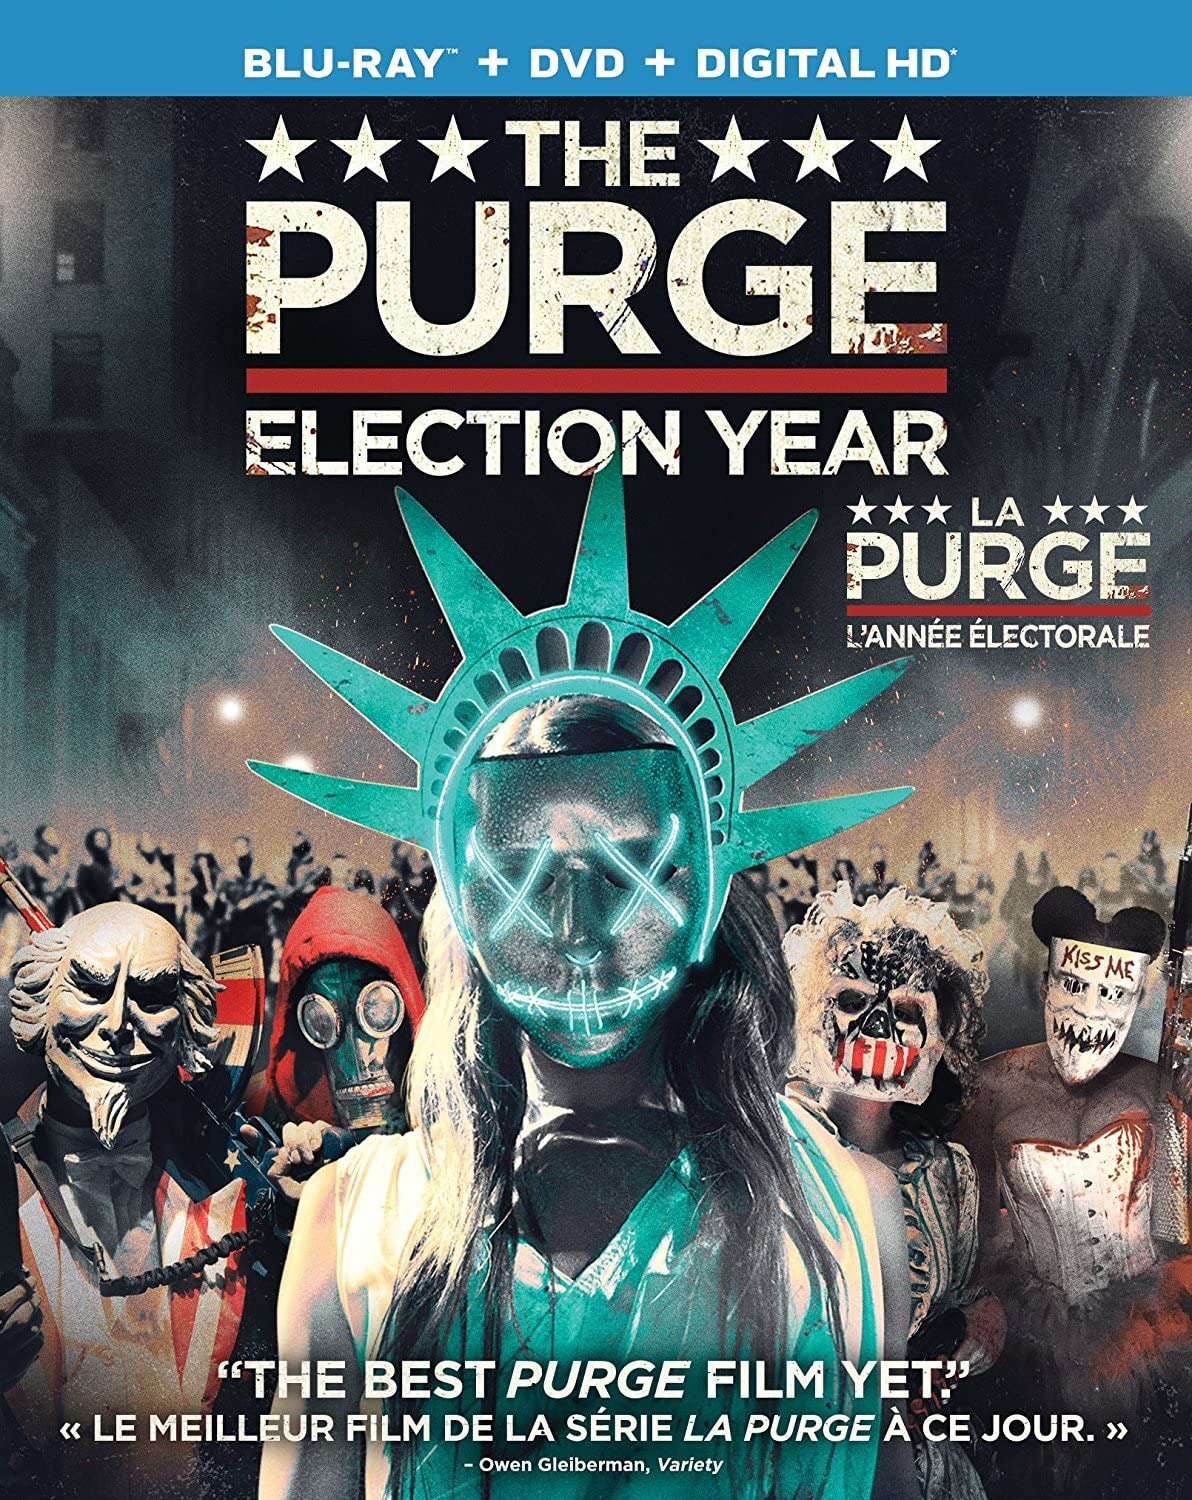 The Purge: Election Year (Blu-ray + DVD + Digital HD) Languages & Subtitles: English/ French & Spanish) [DVD]